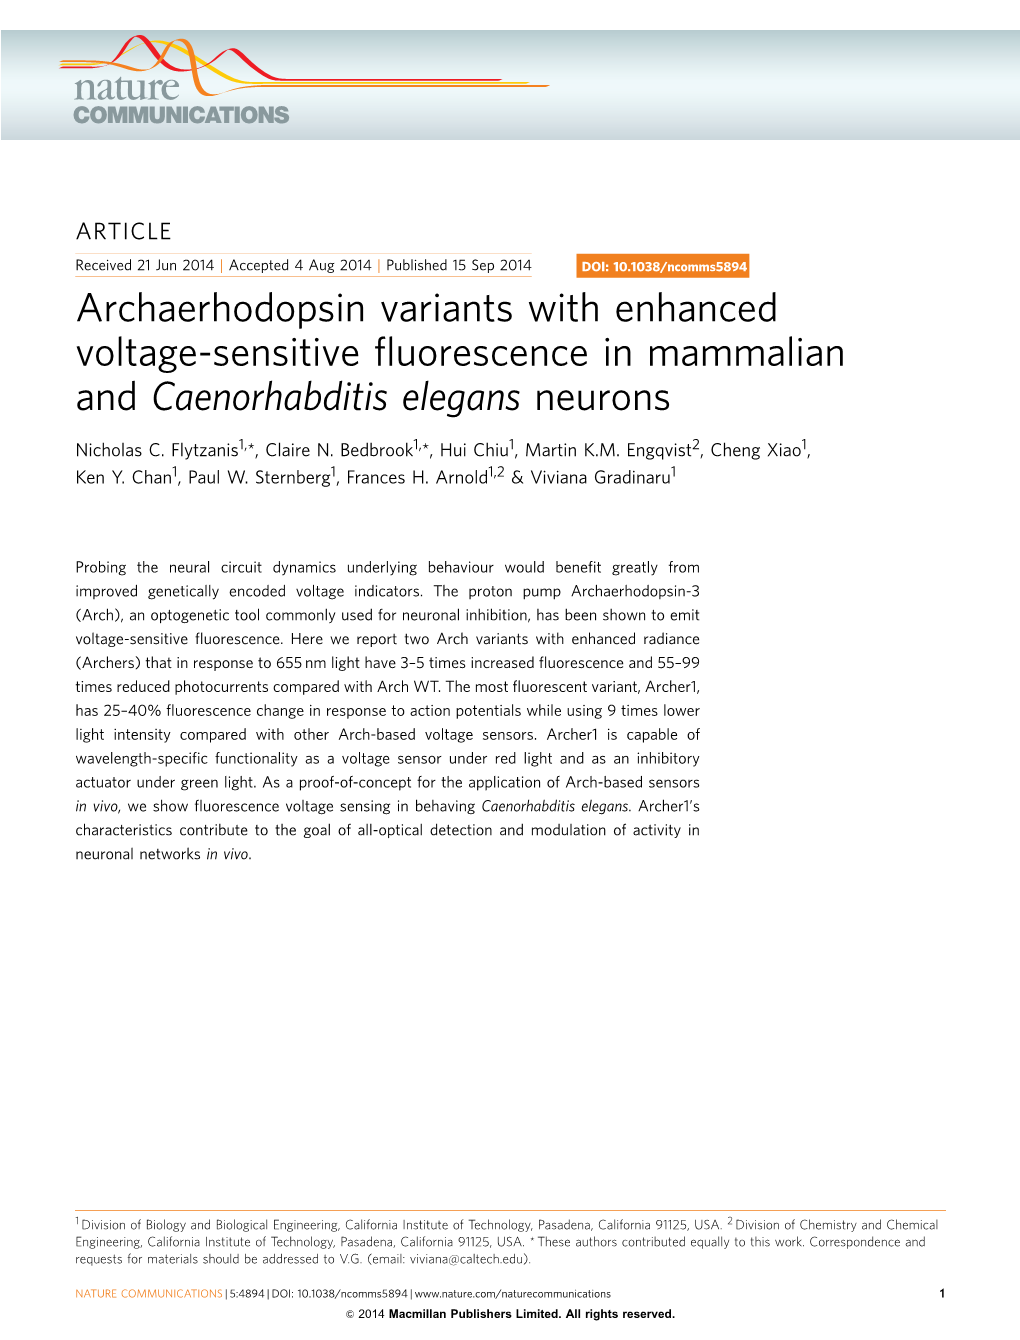 Archaerhodopsin Variants with Enhanced Voltage-Sensitive Fluorescence in Mammalian and Caenorhabditis Elegans Neurons